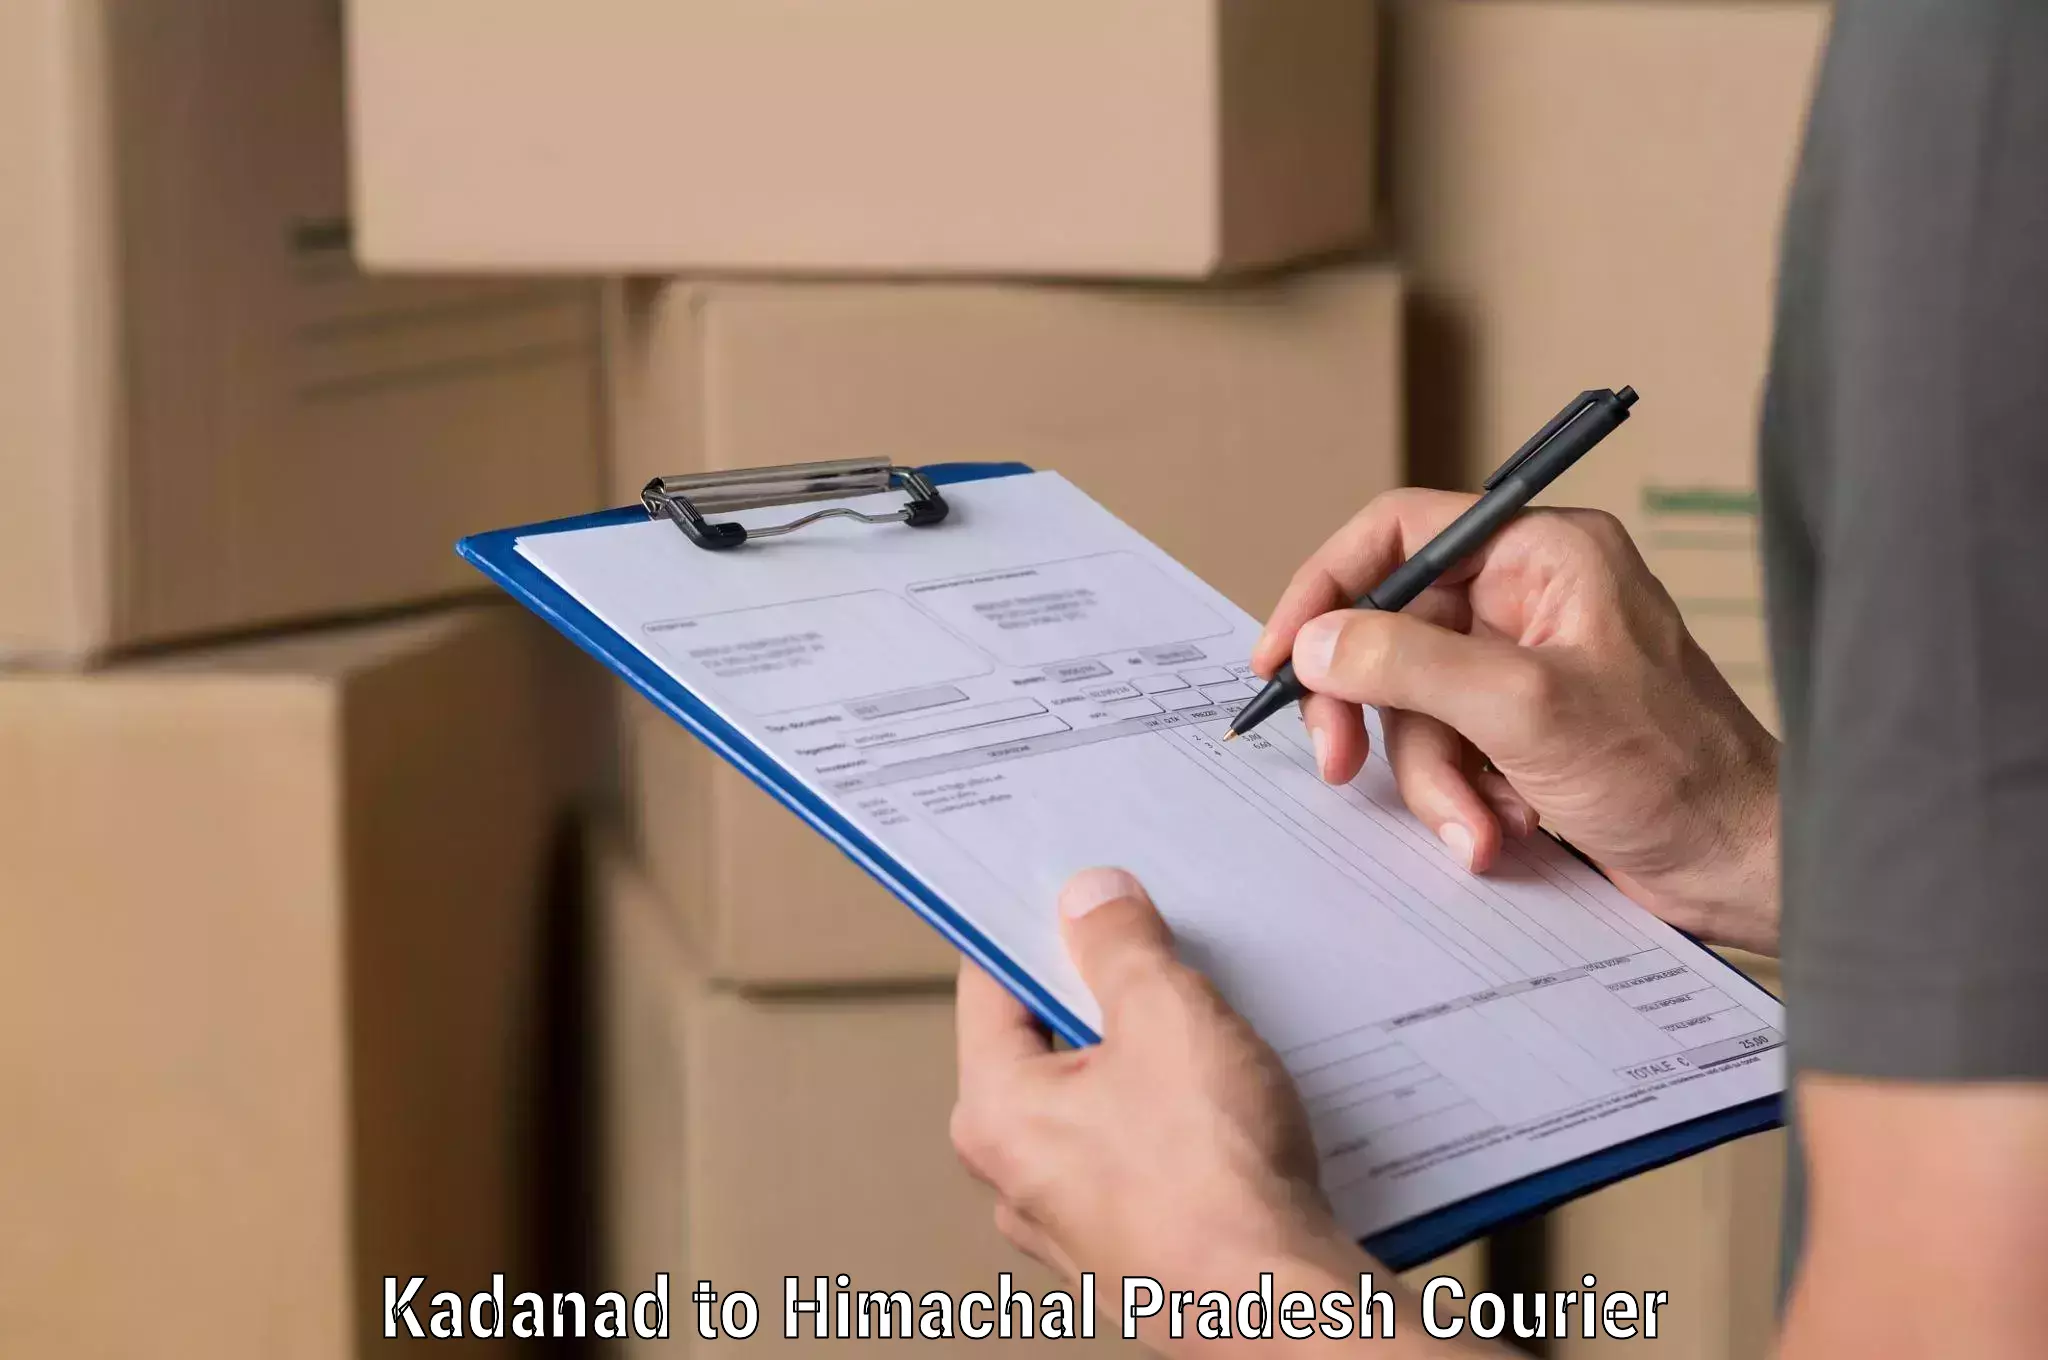 Courier service innovation Kadanad to Himachal Pradesh